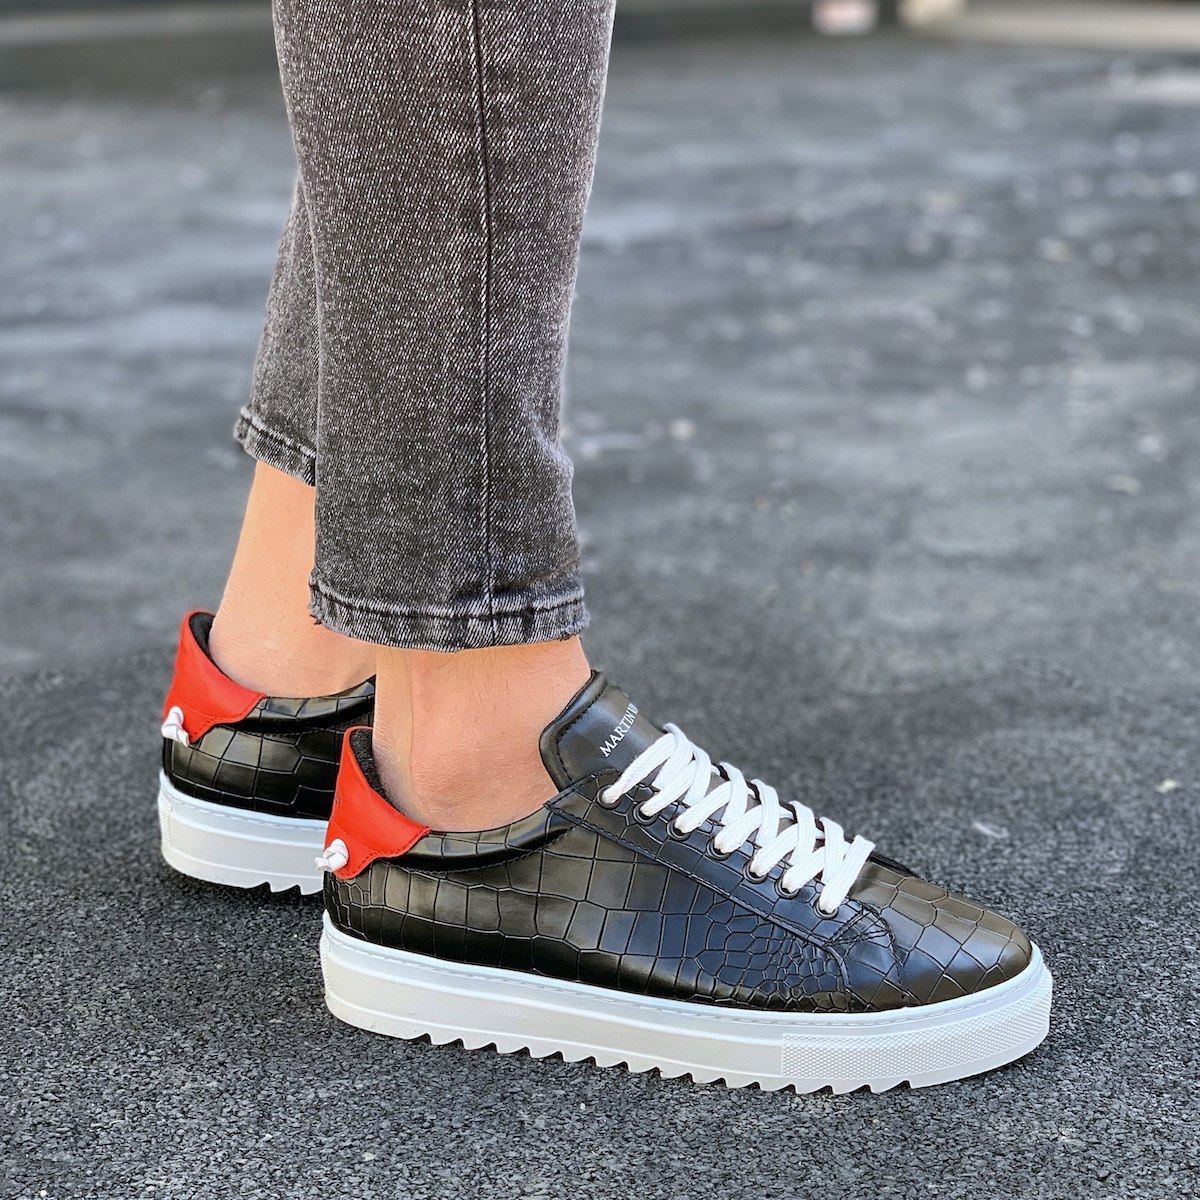 Men’s Low Top Sneakers Shoes Black-White | Martin Valen